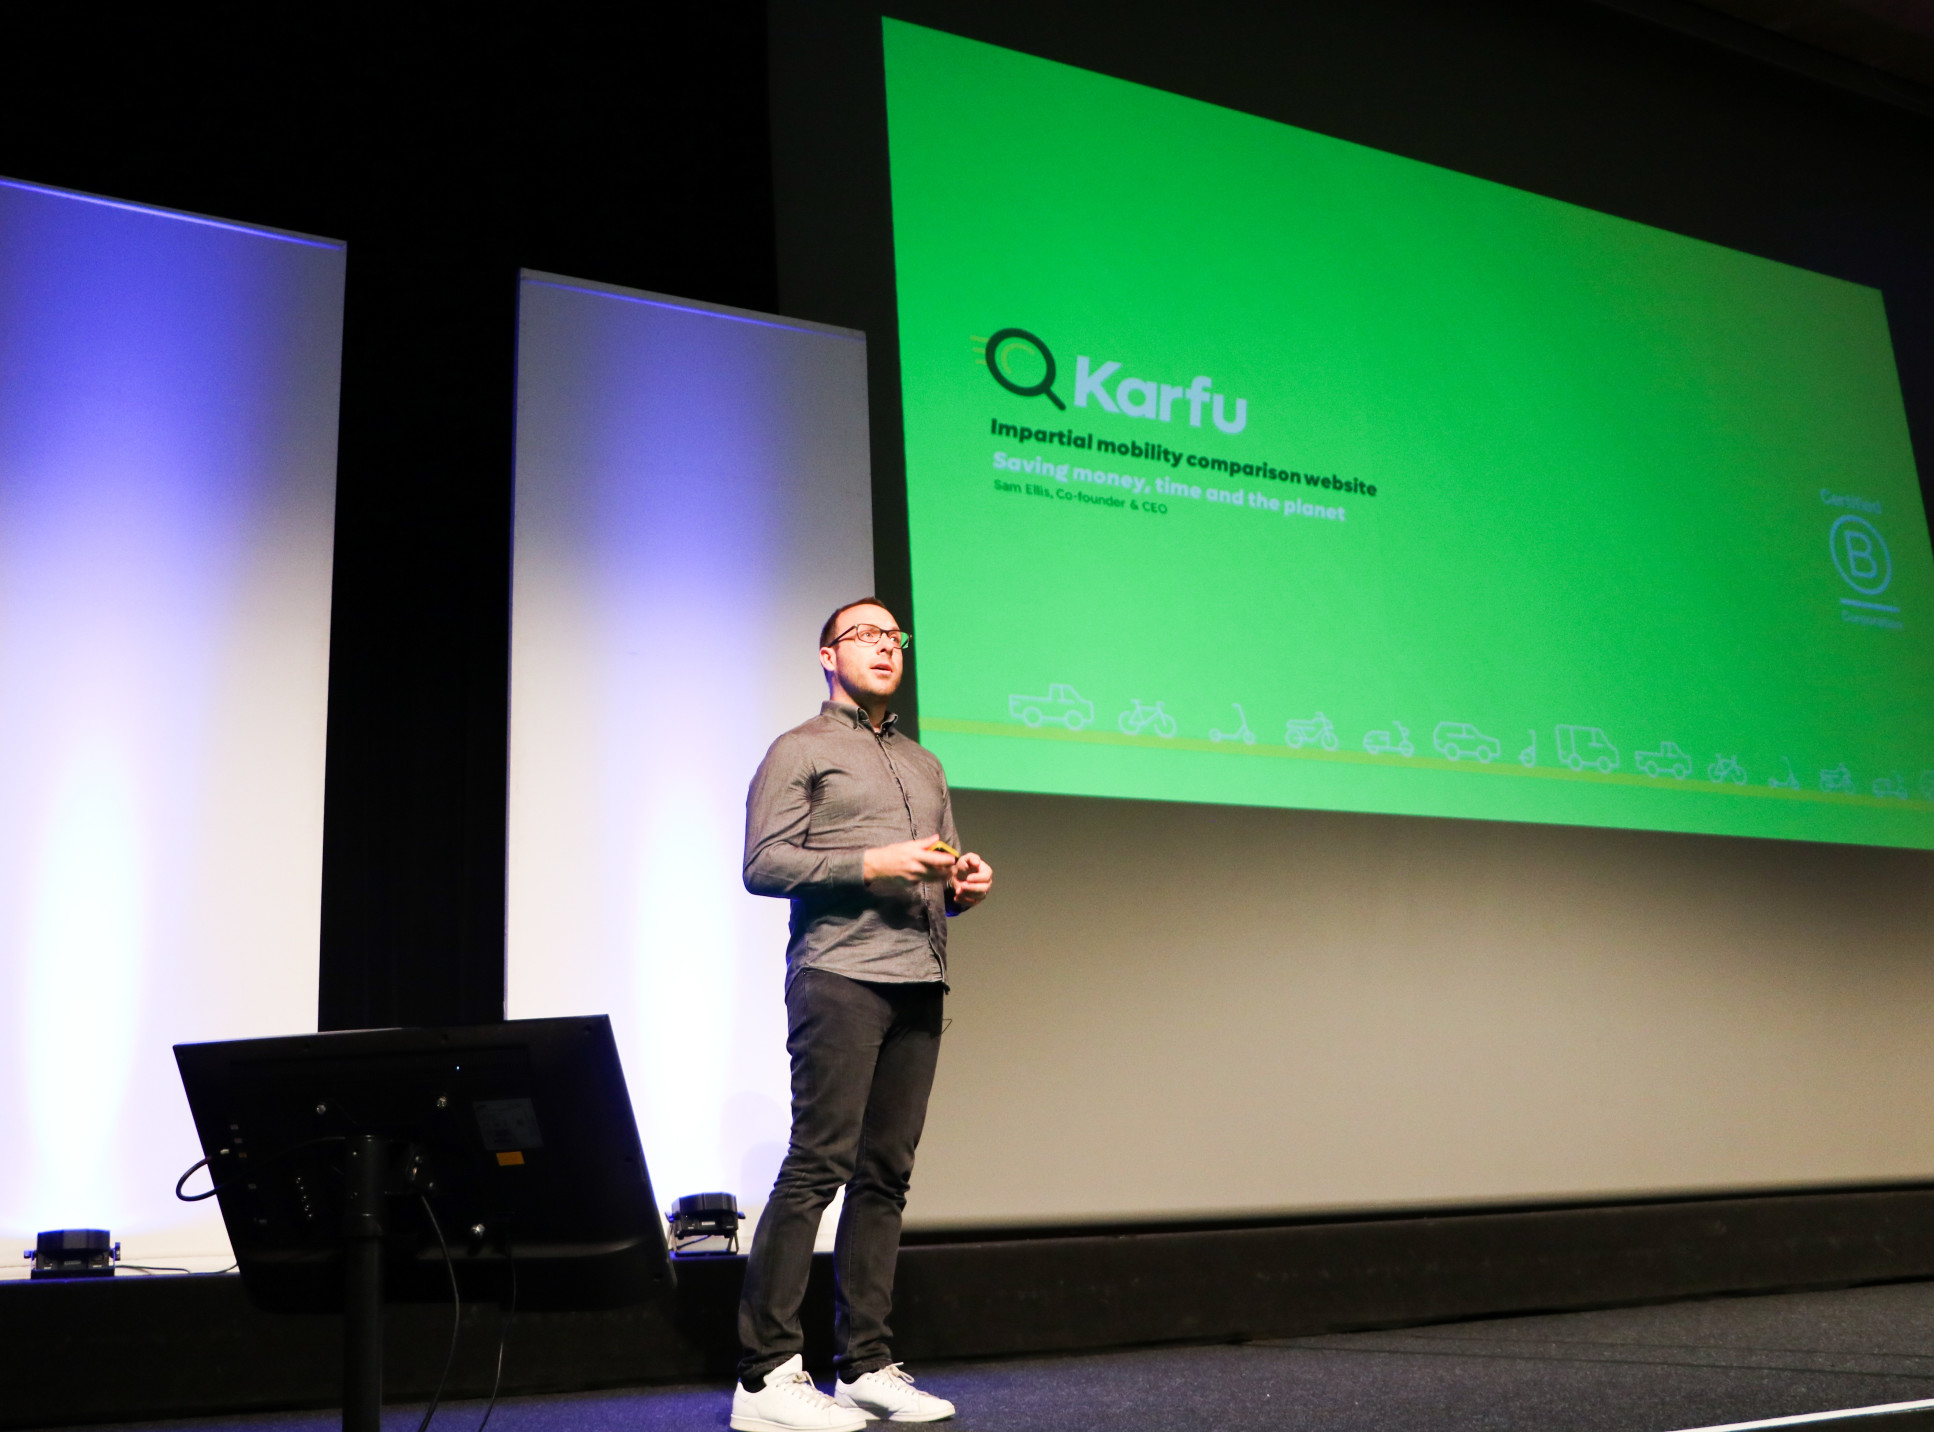 Sam Ellis, cofounder of Karfu, presenting in front of a screen